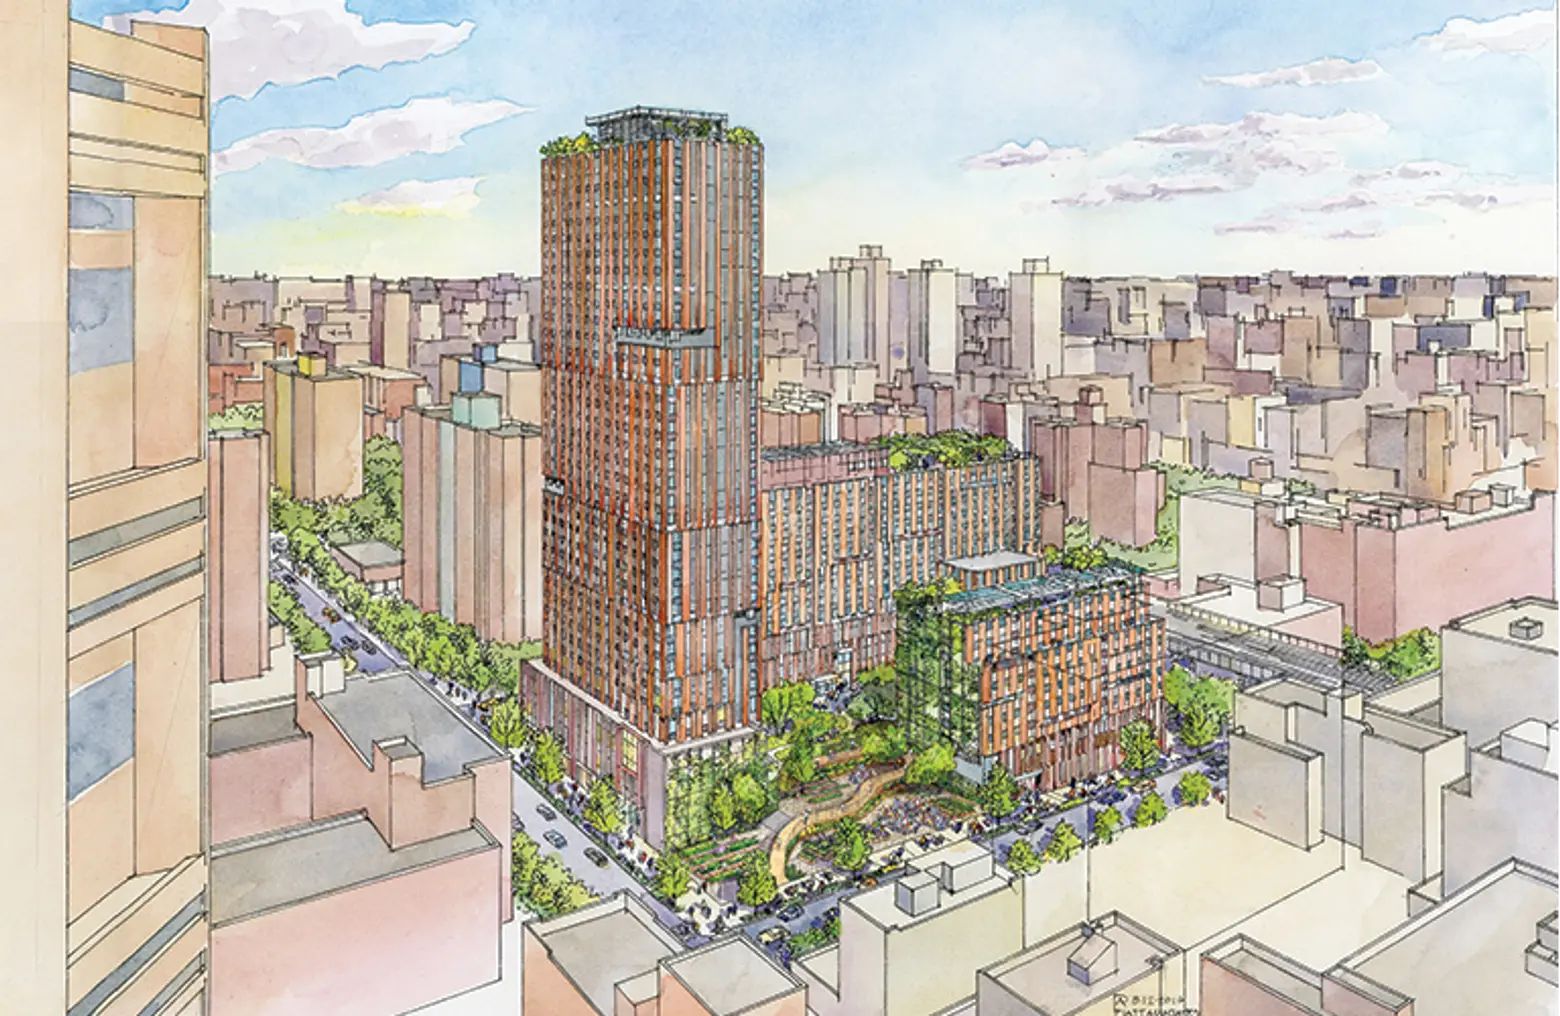 Sendero Verde, Handel Architects, L+M Development, East Harlem affordable housing, passive house NYC